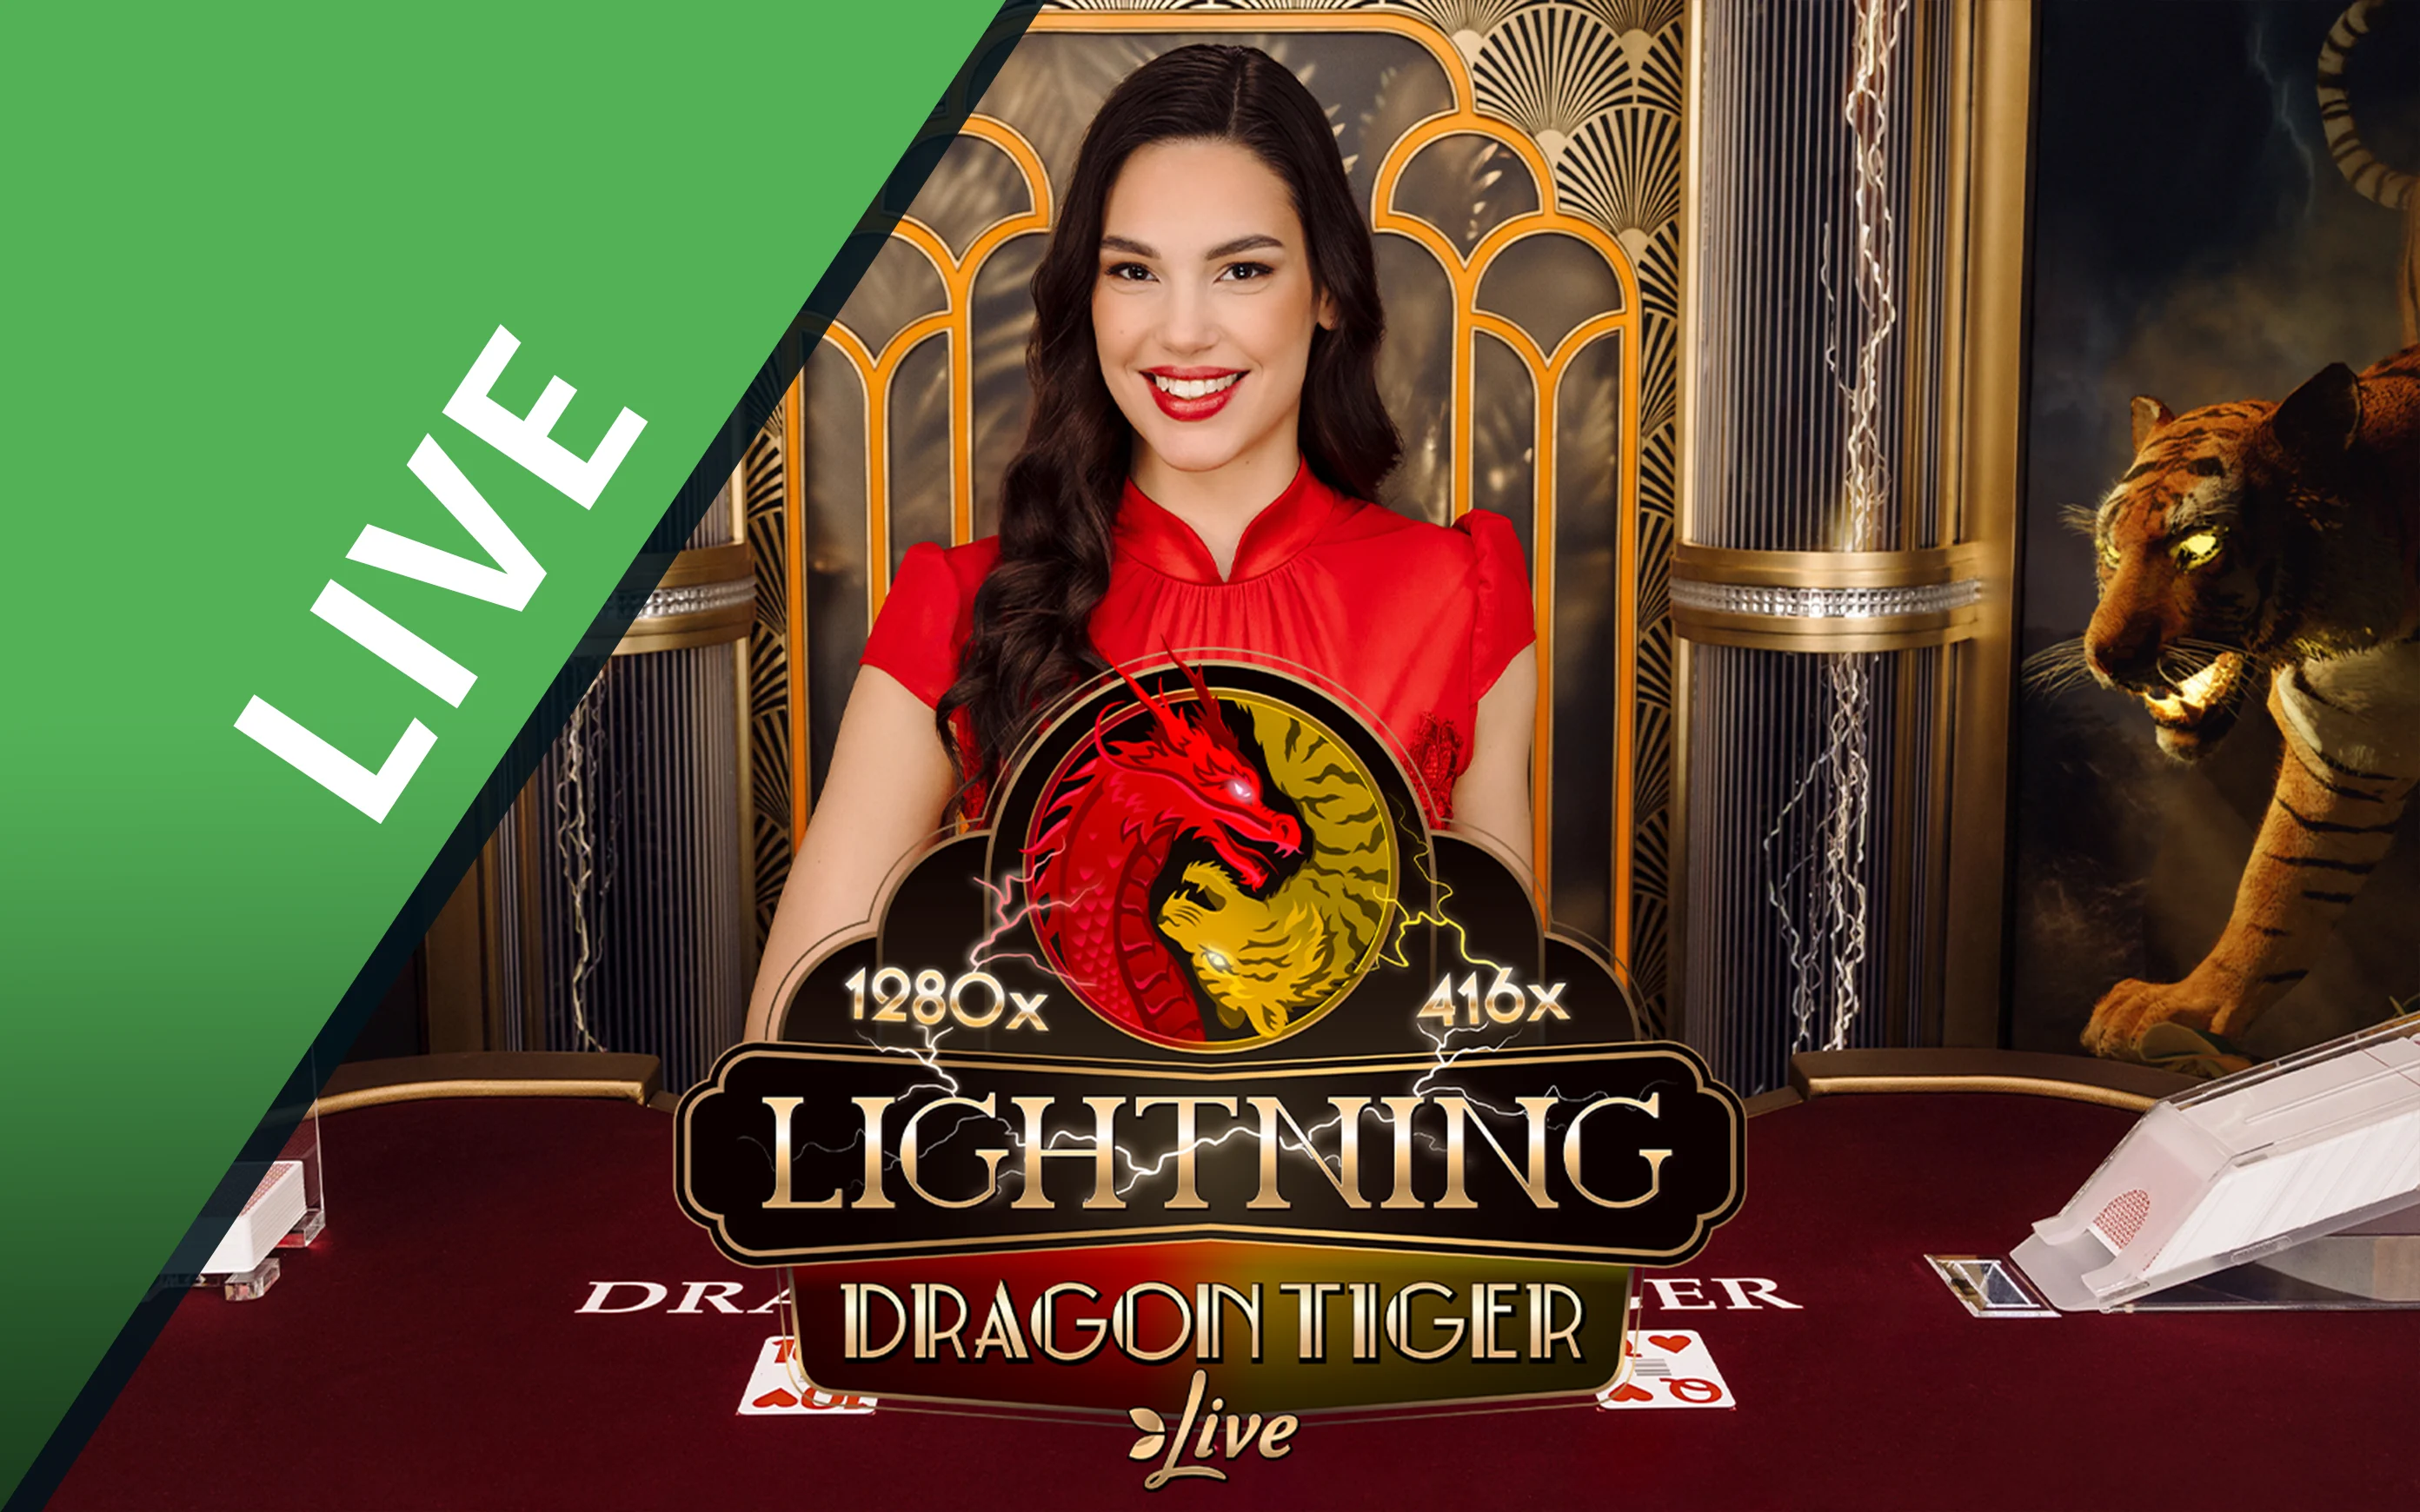 Starcasino.be online casino üzerinden Lightning Dragon Tiger oynayın